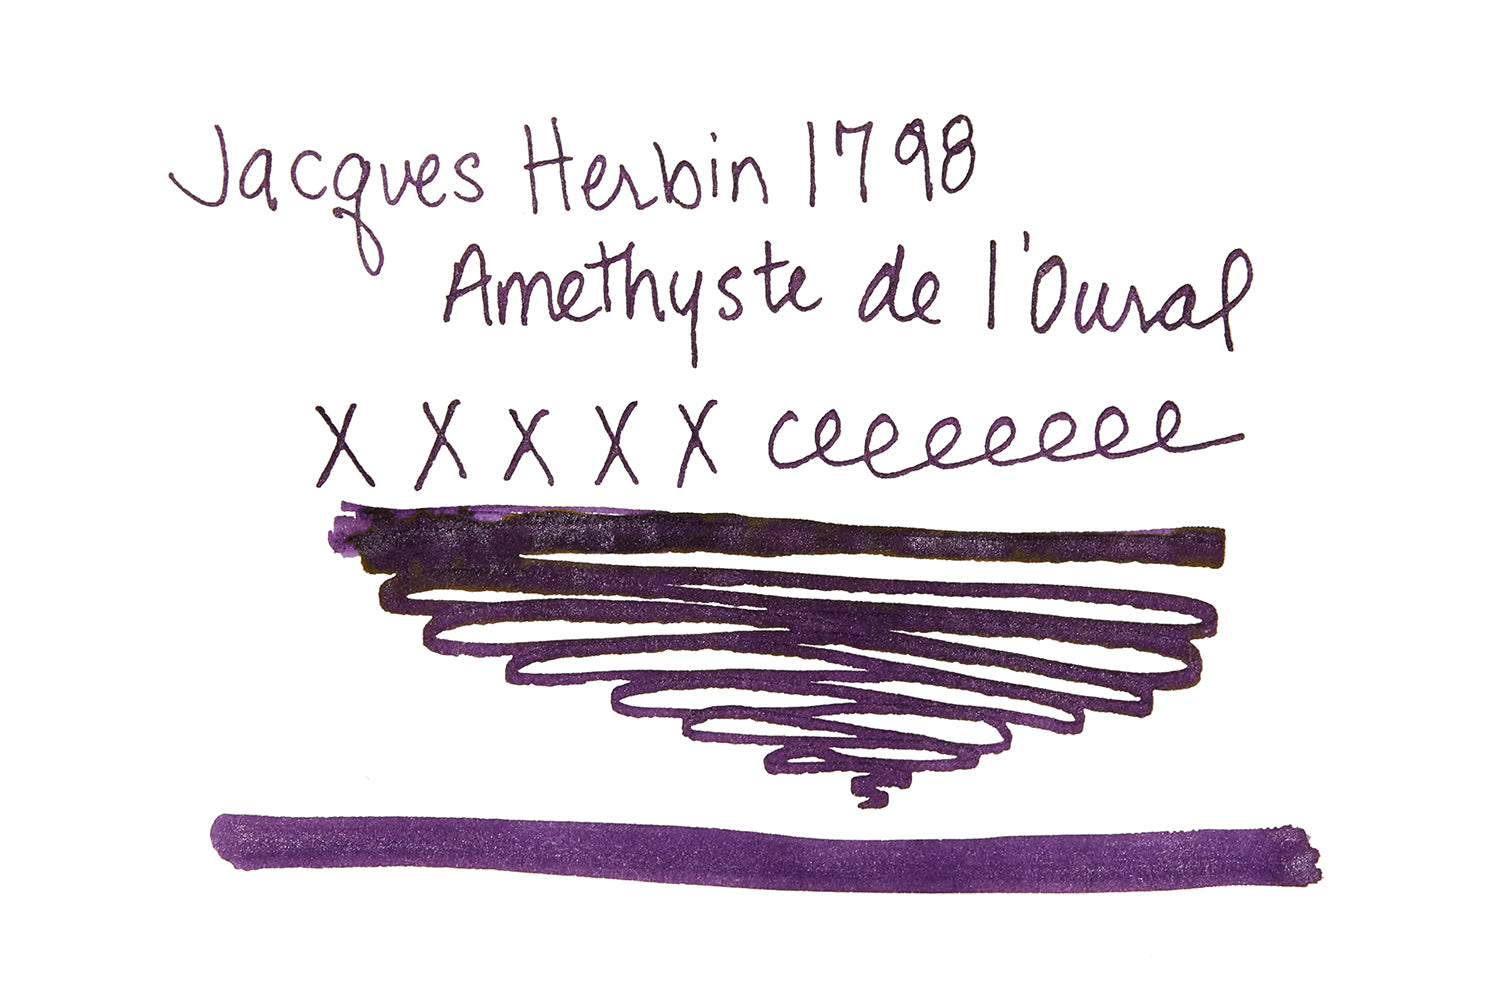 Jacques Herbin Amethyste de l'Oural fountain pen ink on on white blank paper